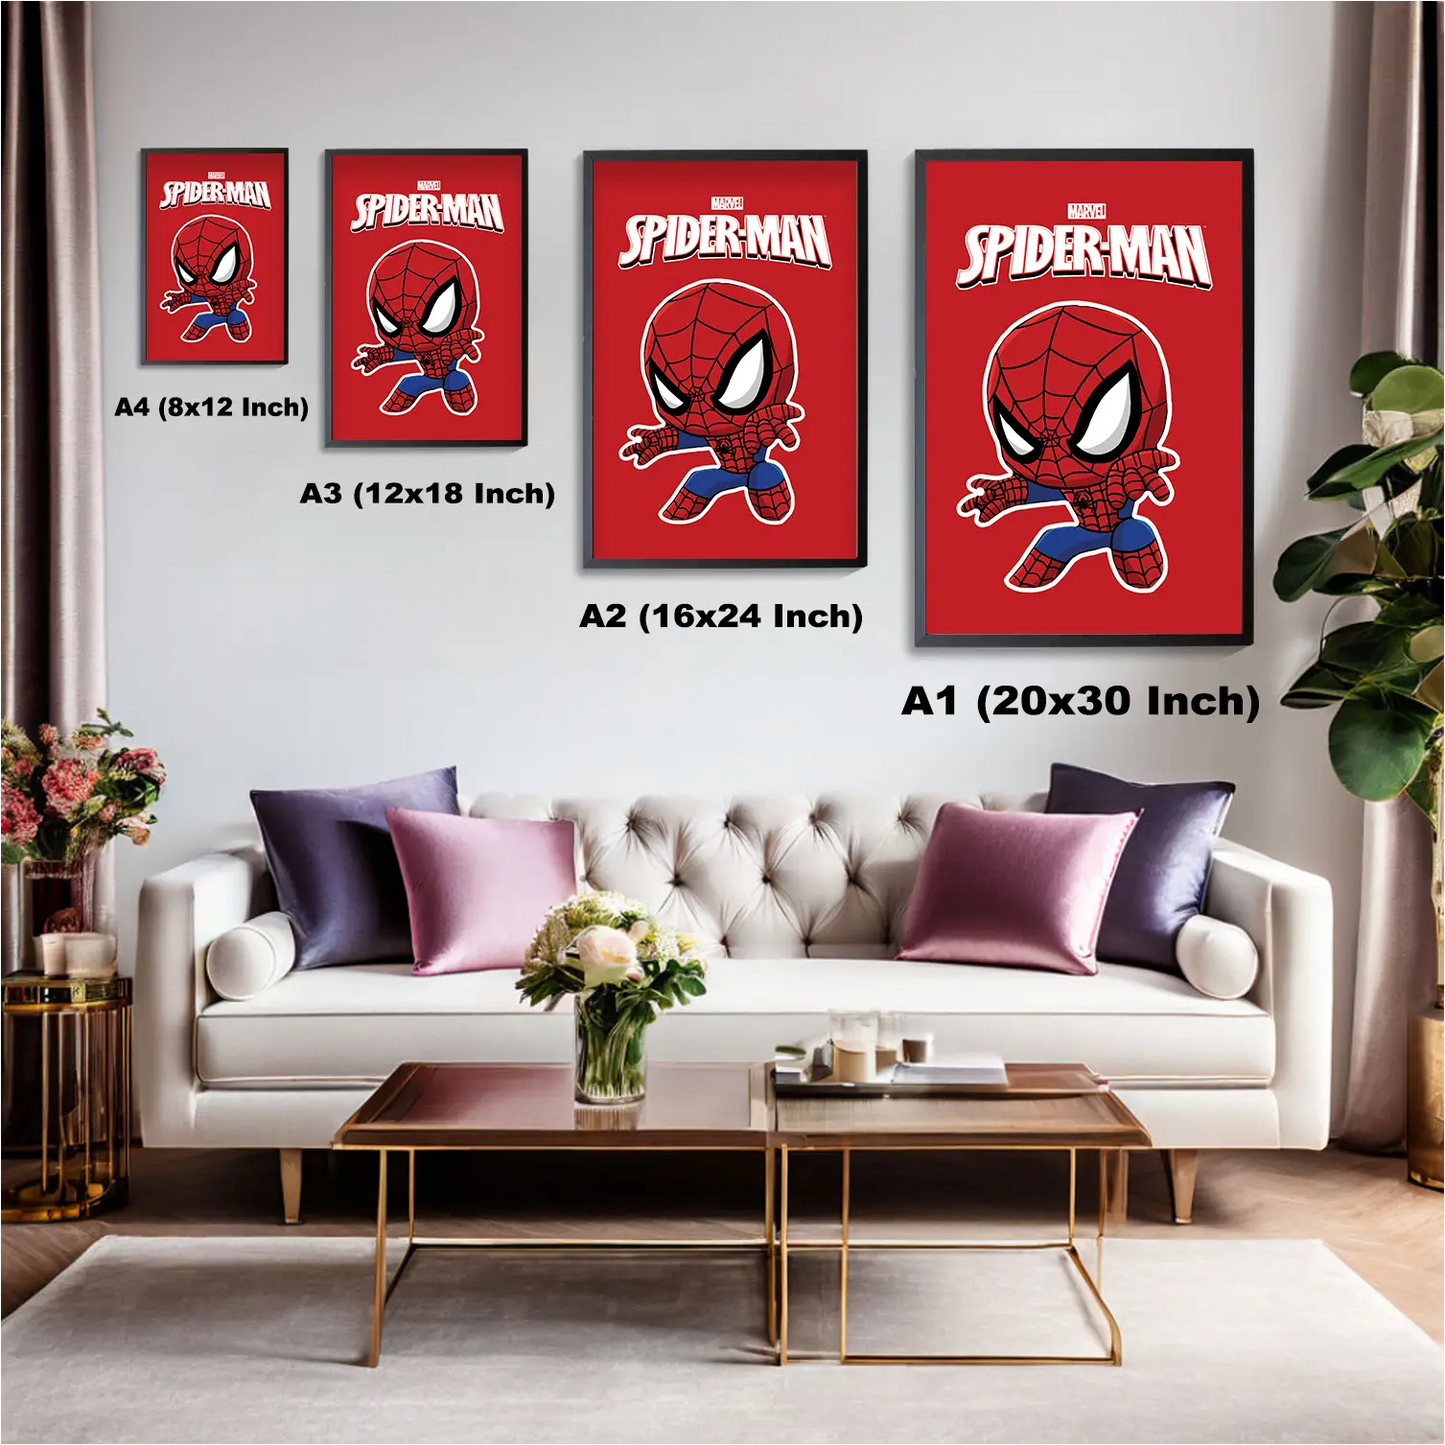 Spider Man - Minimal Wall Poster | Frame | Canvas